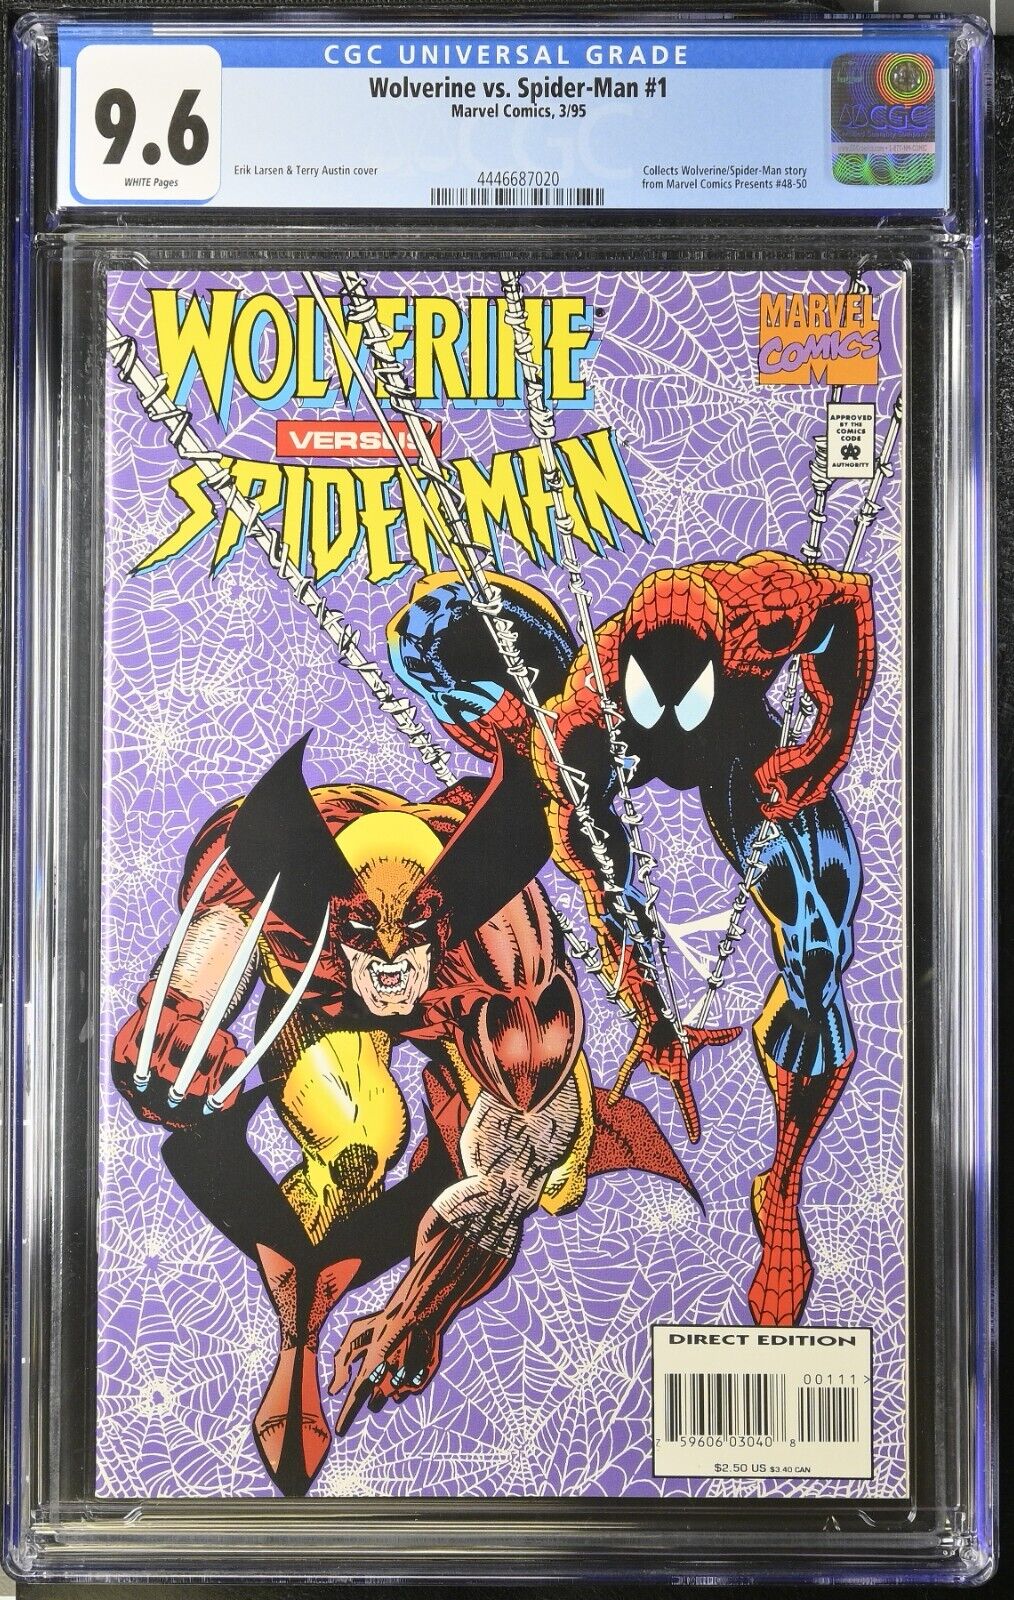 WOLVERINE vs SPIDER-MAN #1 CGC 9.6 Marvel 1995 Erik Larsen & Terry Austin cover